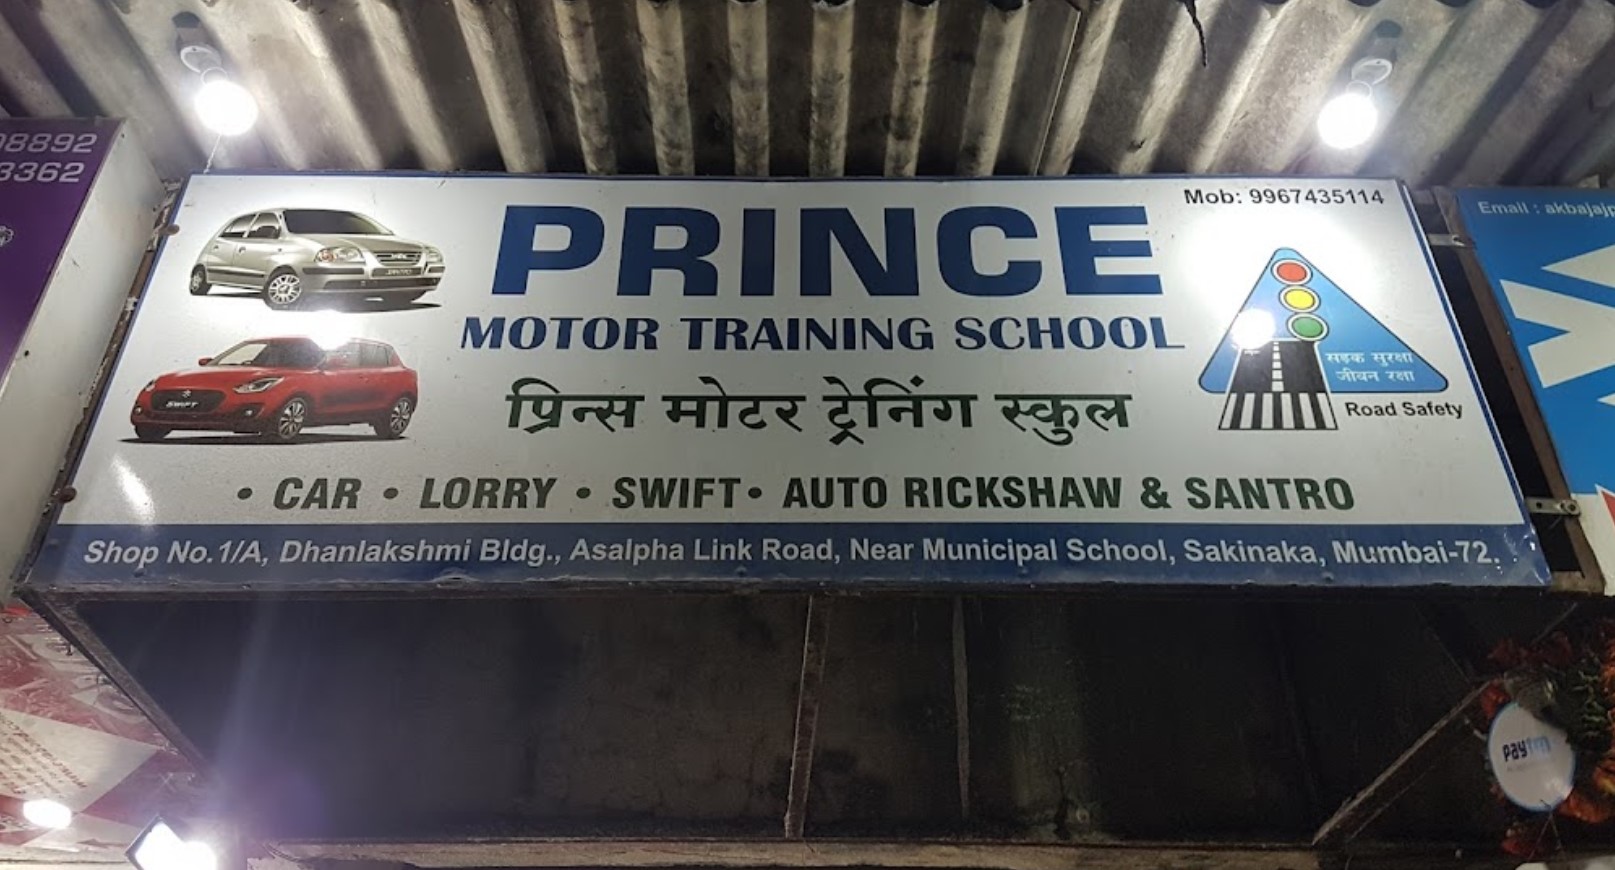 Prince Motor Training School in Saki Naka